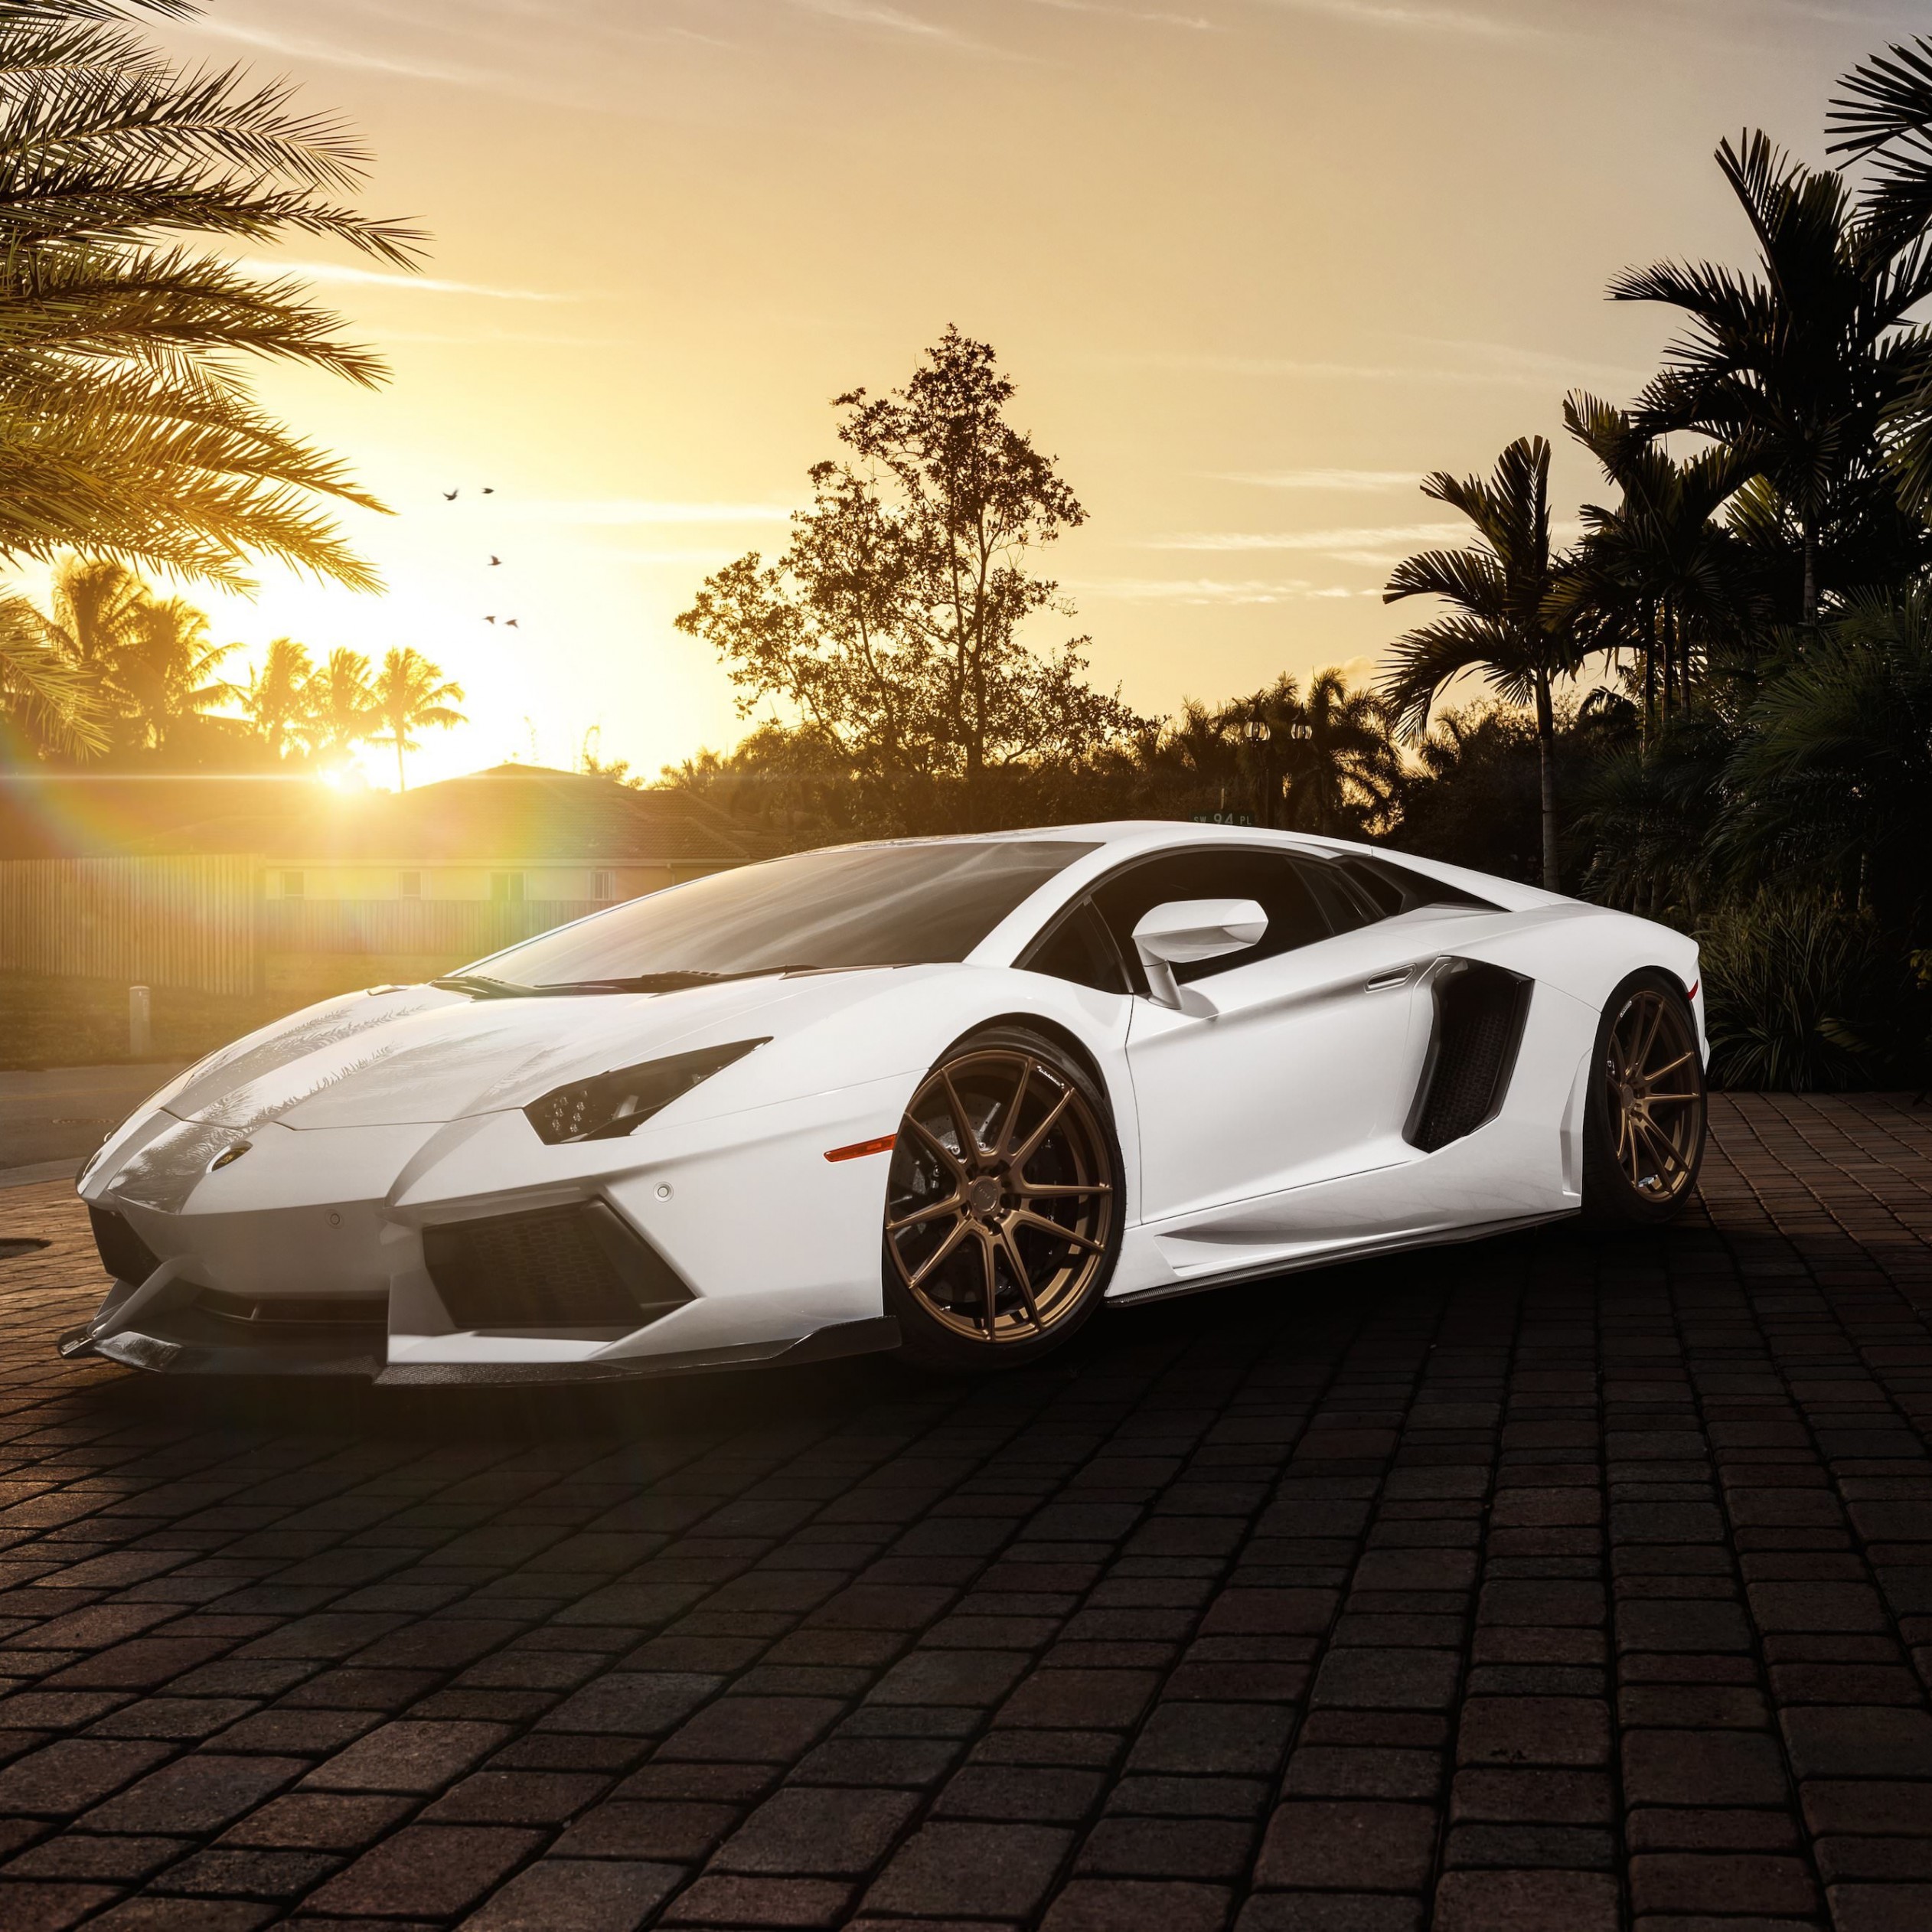 Lamborghini Aventador LP700-4 in White Wallpaper for Apple iPad Air